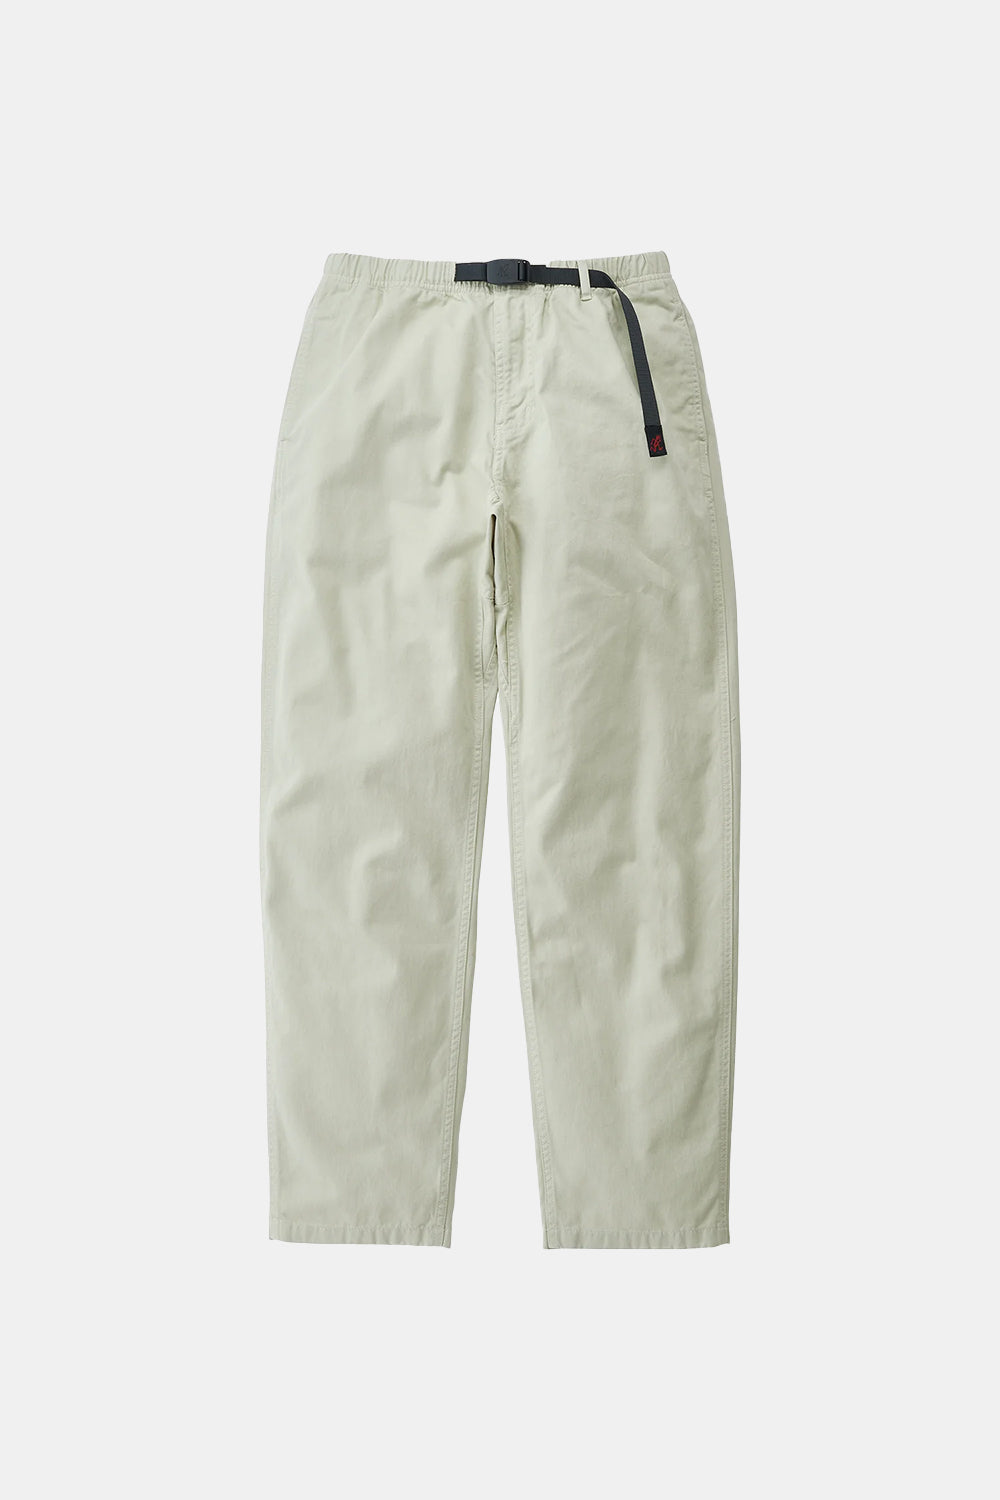 G-pantalon en velours côtelé Gramicci (beige moka) 